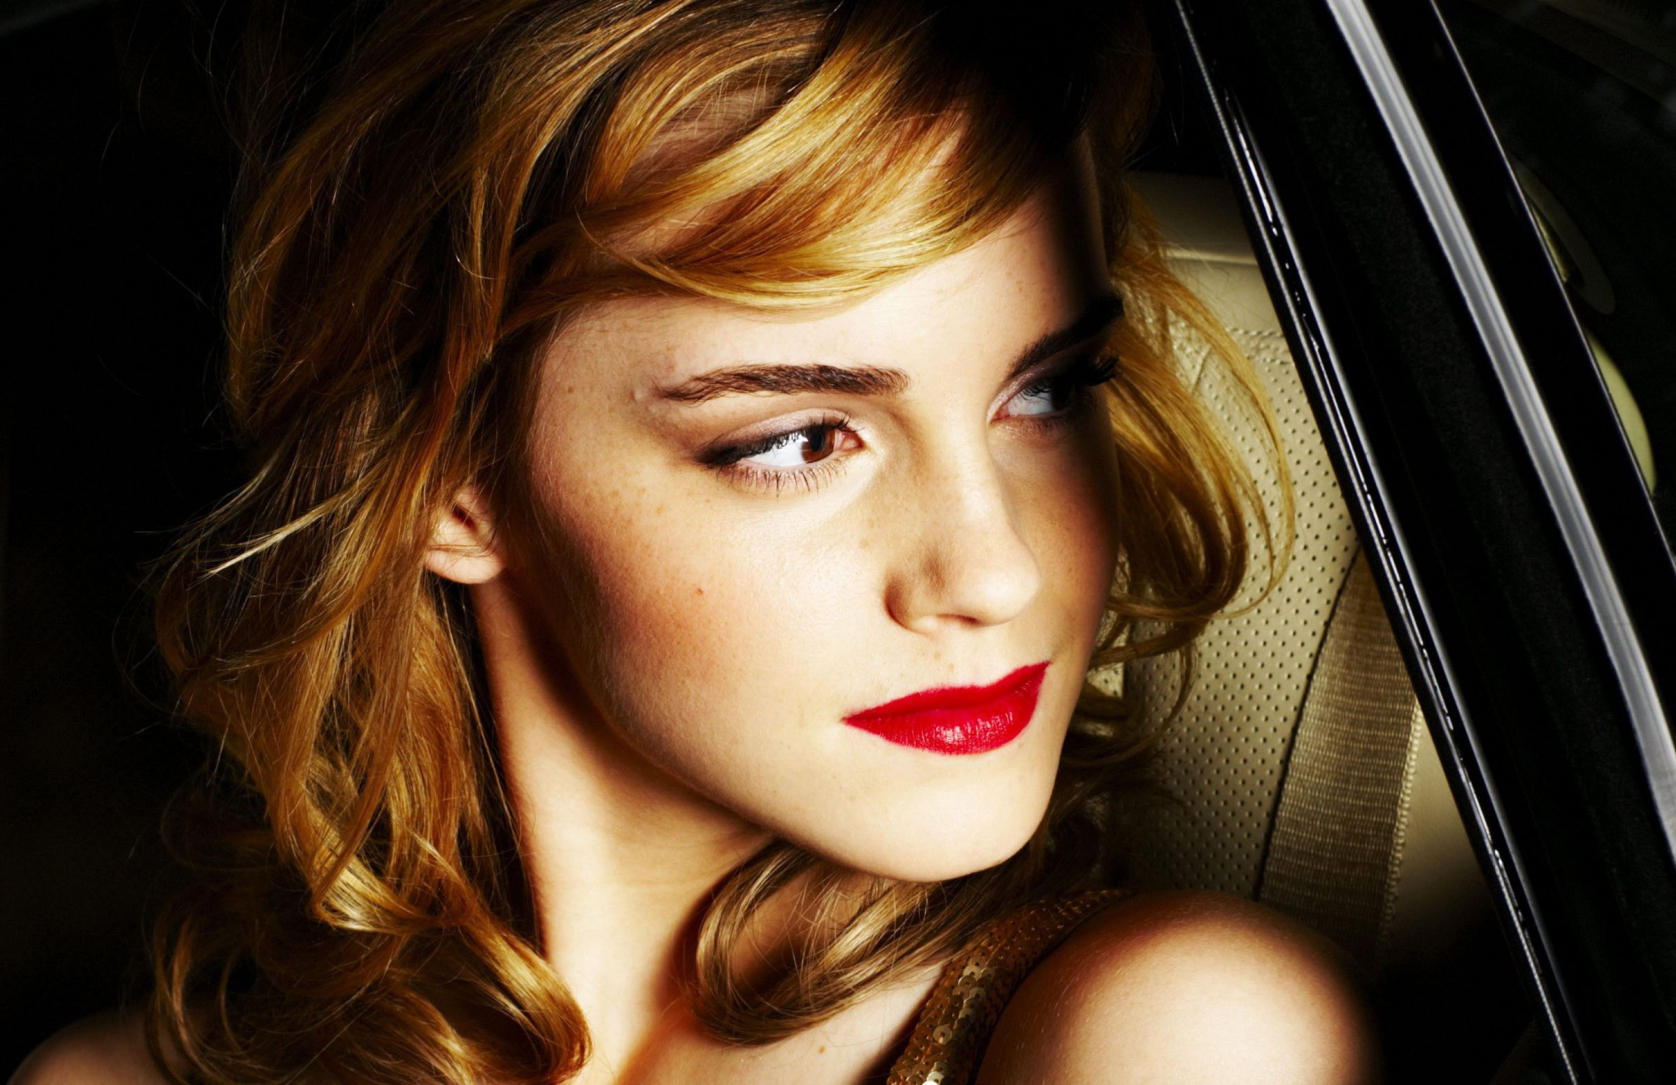 1676x1085 Emma Watson in car 1676x1085 Resolution Wallpaper, HD ...